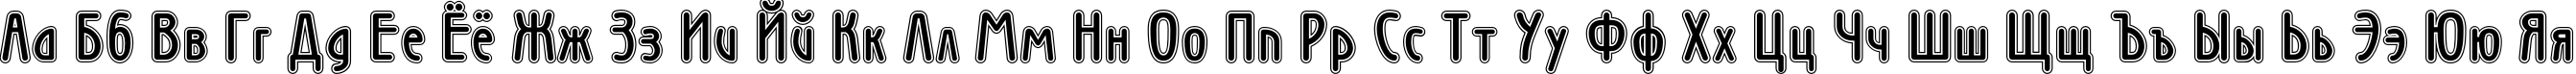 Пример написания русского алфавита шрифтом WienInline